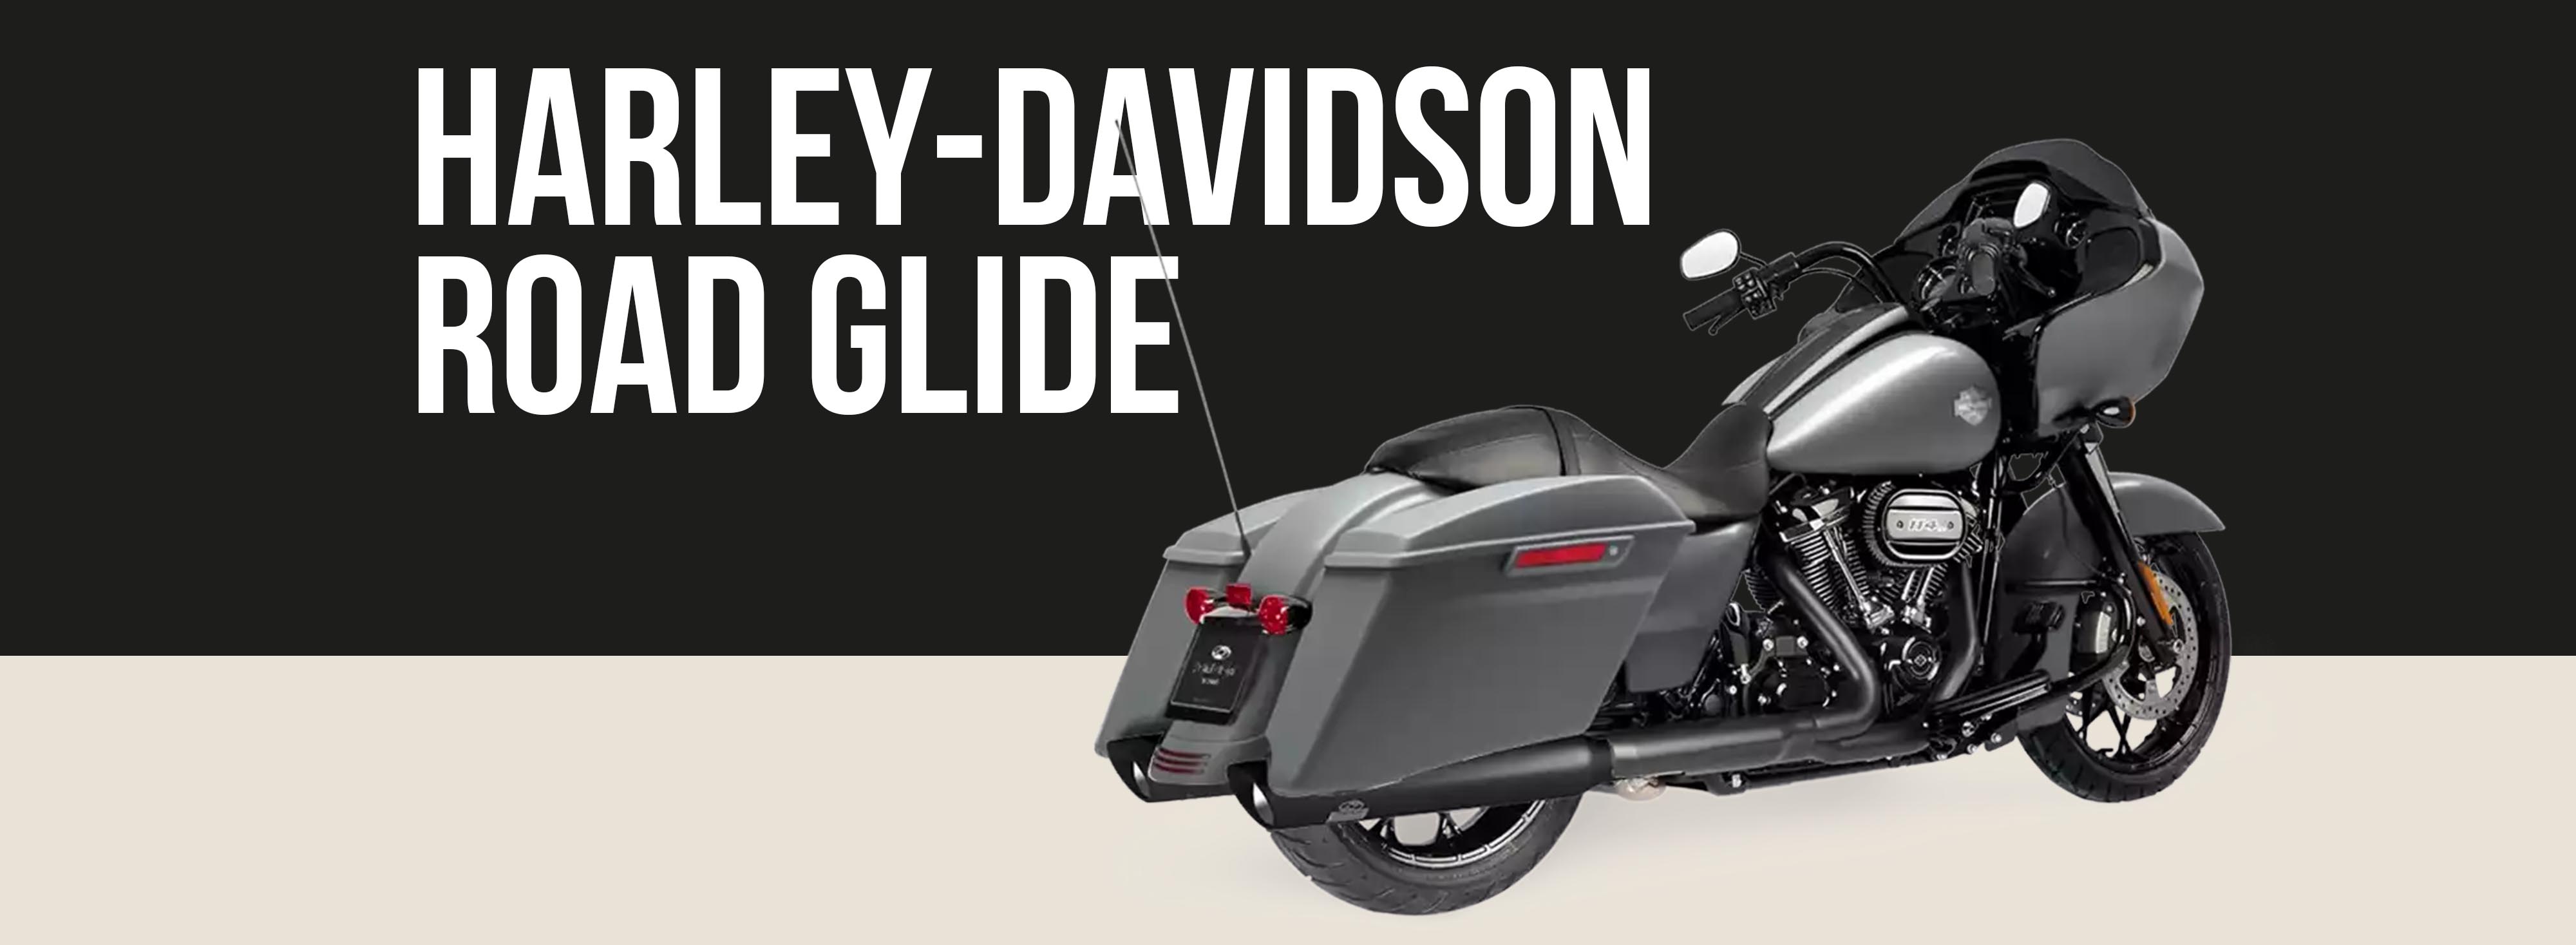 Harley-Davidson Road Glide Motorcycle Brand Page Header